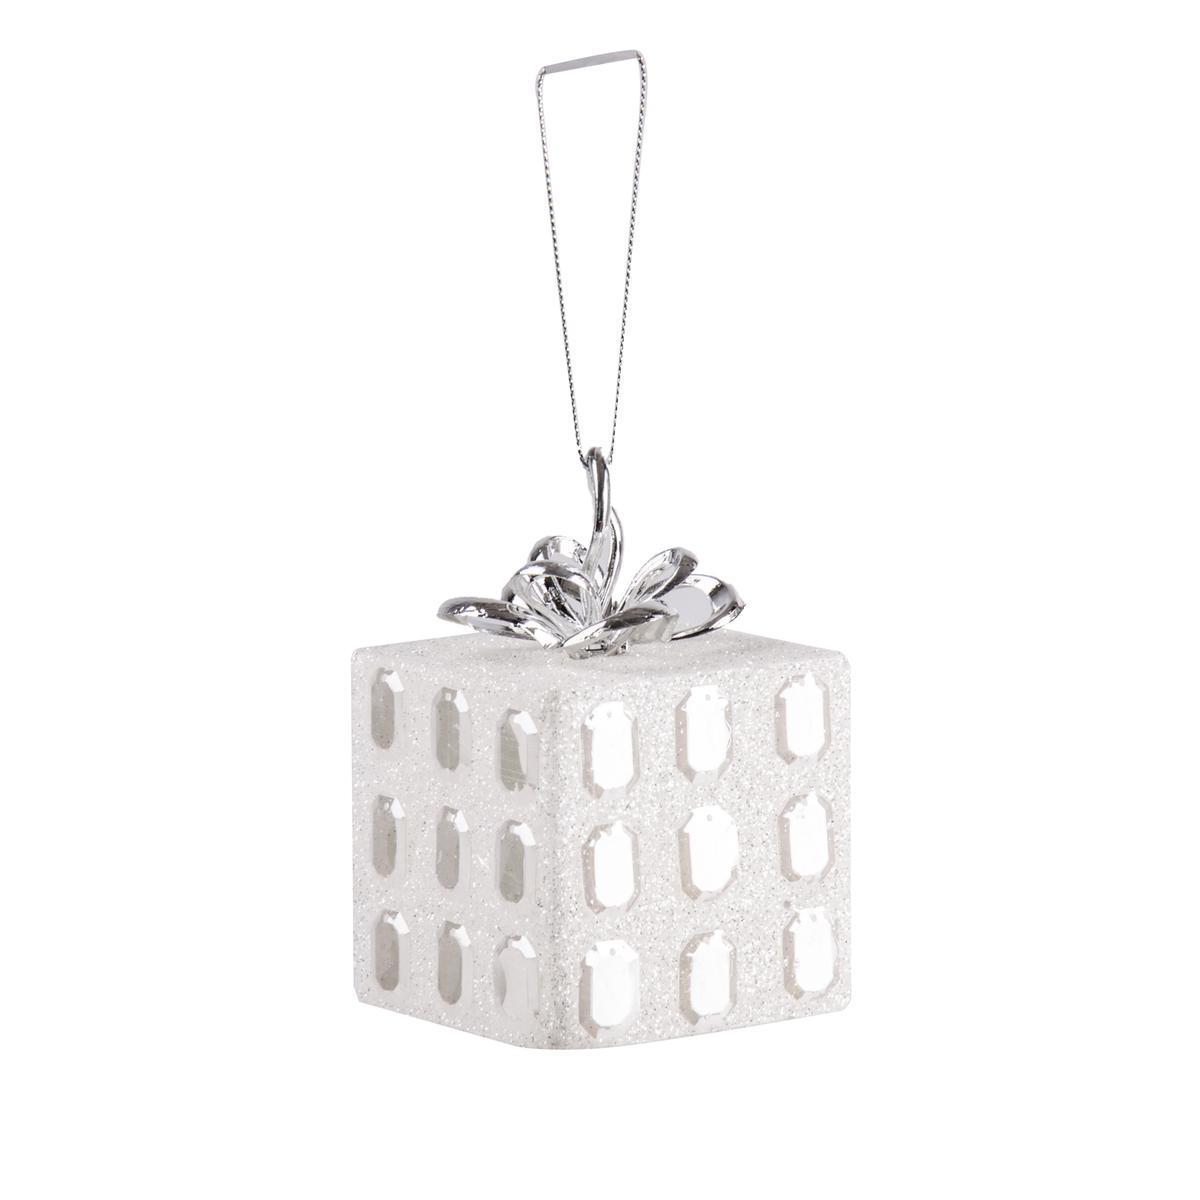 Suspension cadeau - Plastique - 8 x 8 x H 8 cm - Blanc diamant